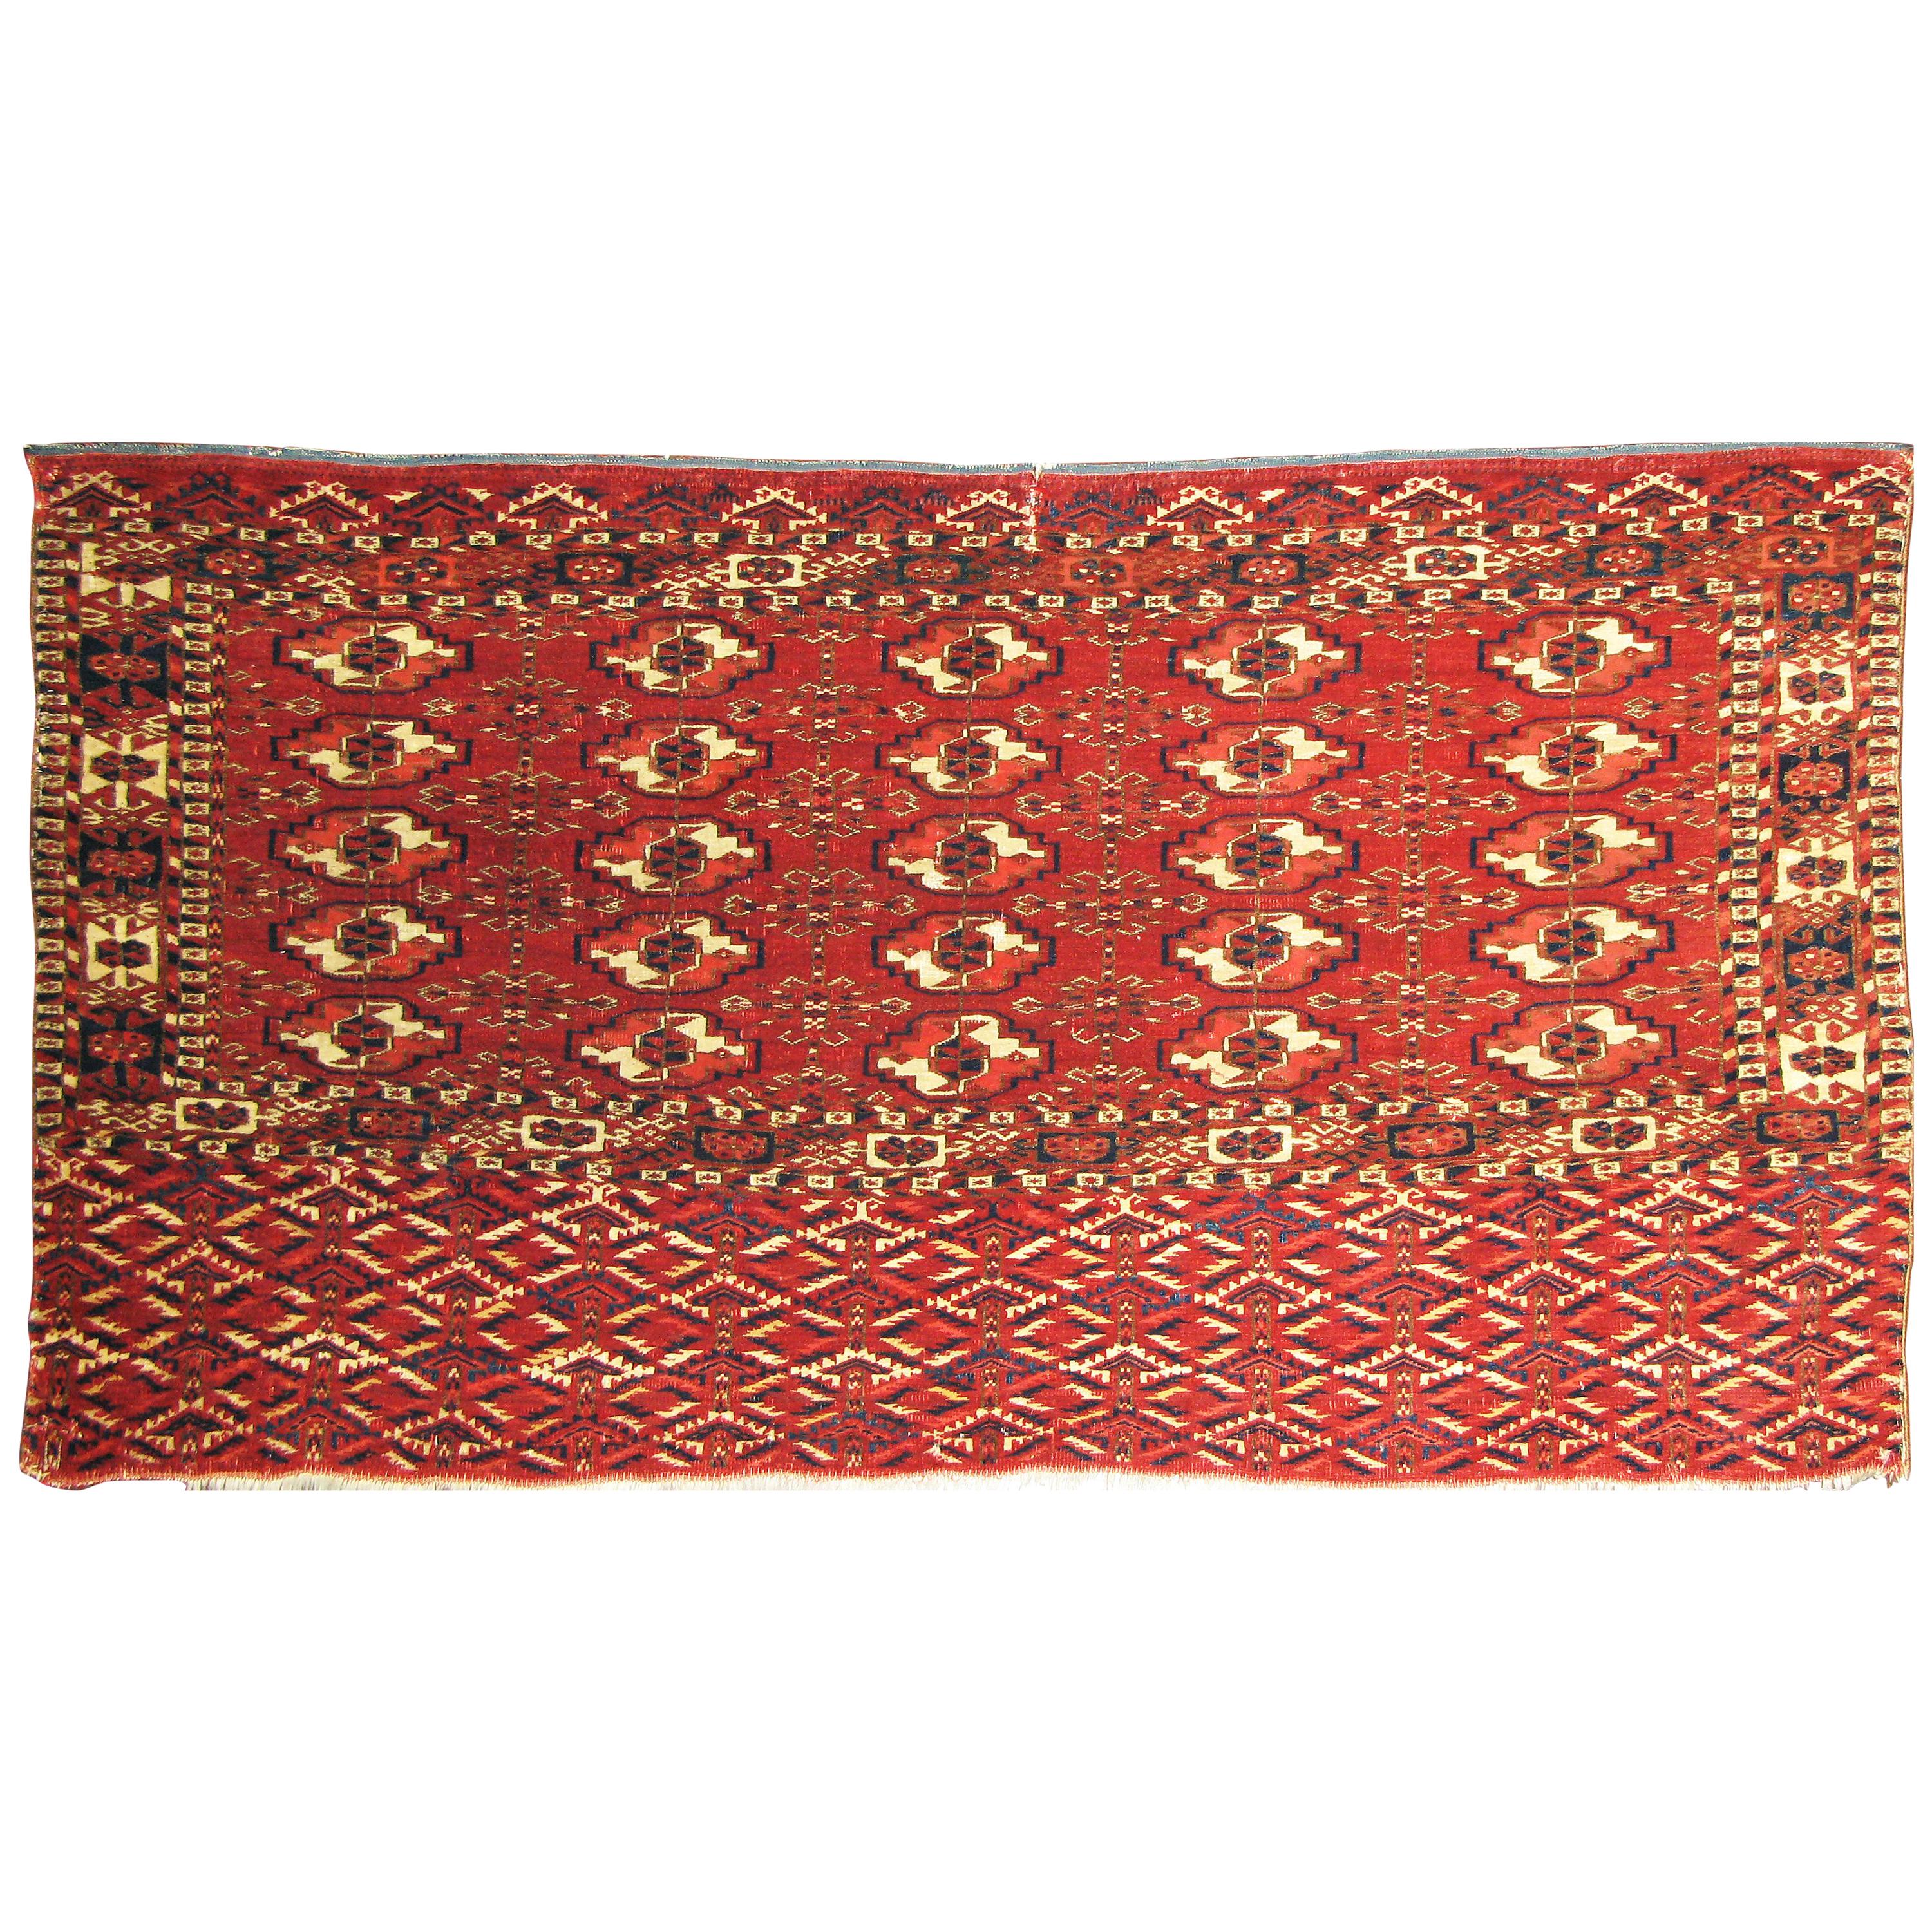 Très beau tapis ancien Tekke Turkomen, vers1900